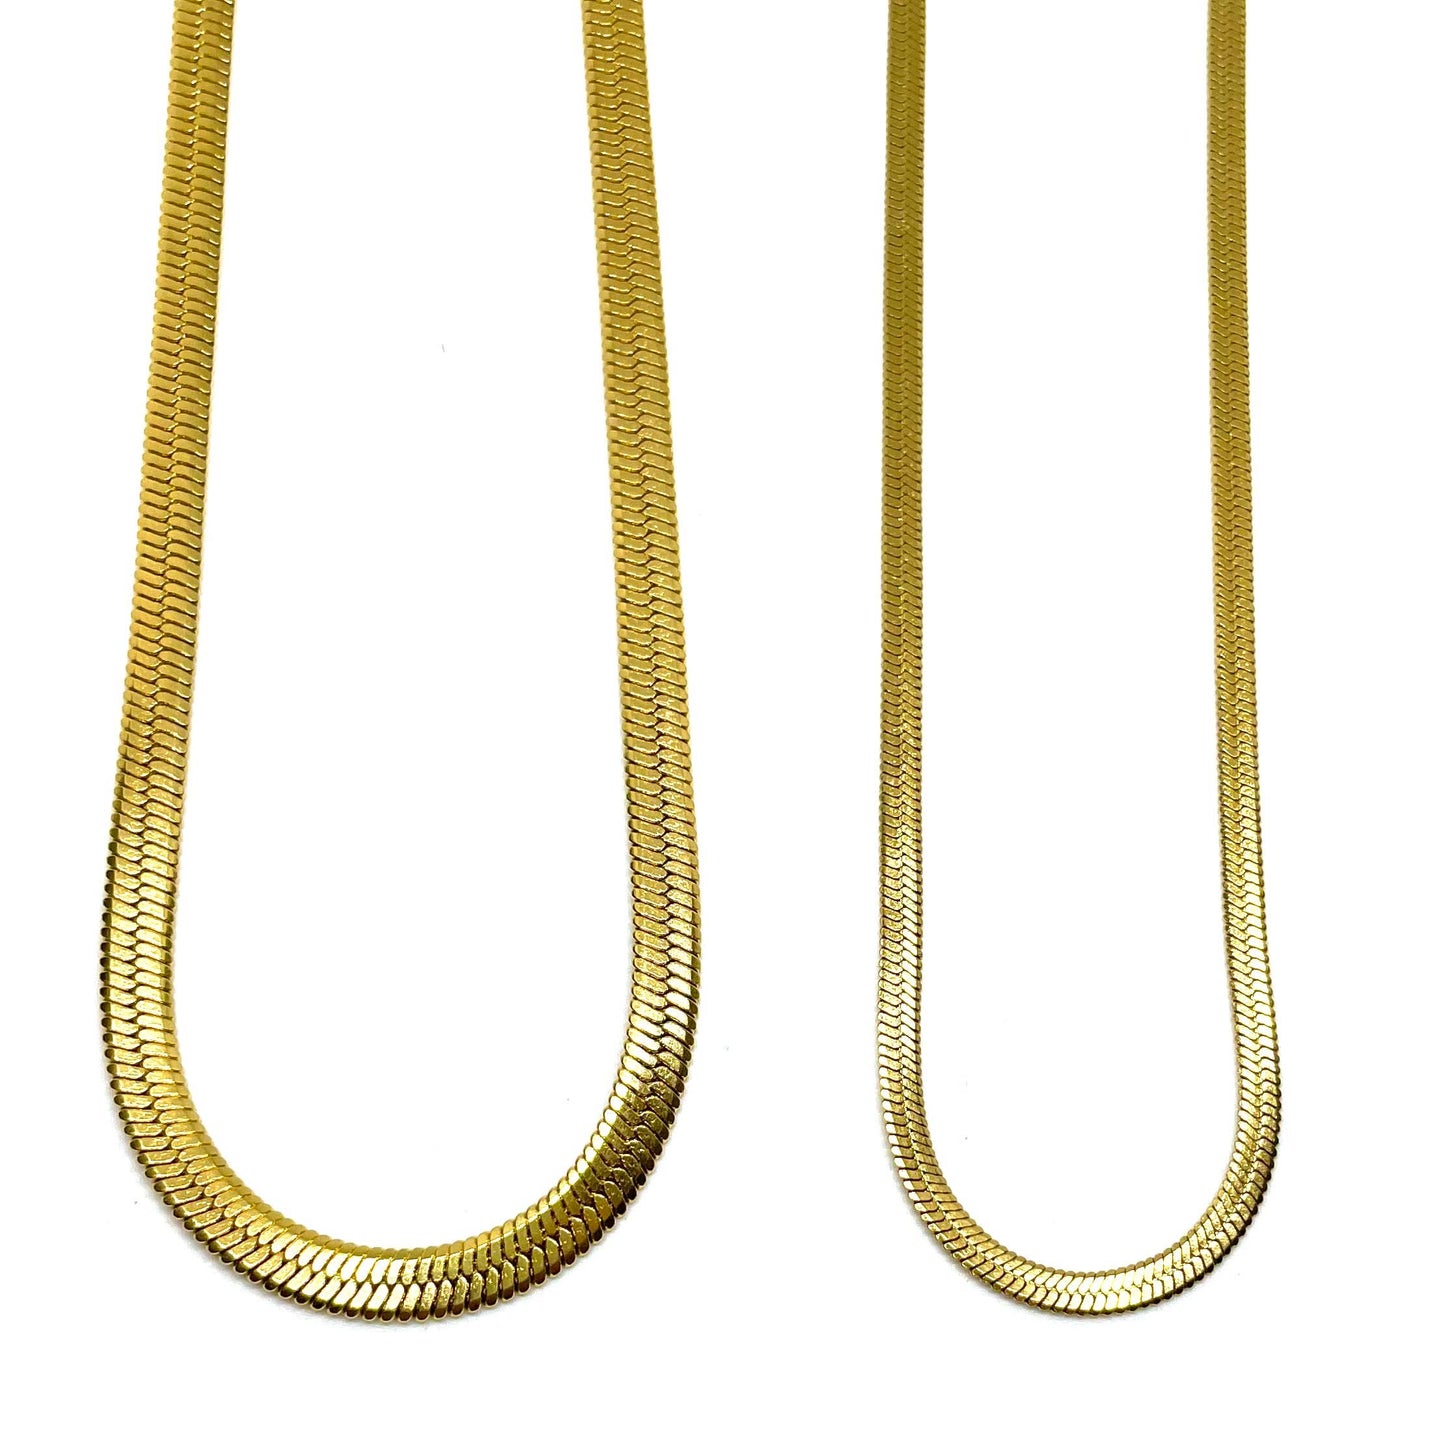 Nikki Smith Designs - Gold Herringbone Necklaces- Stainless Steel